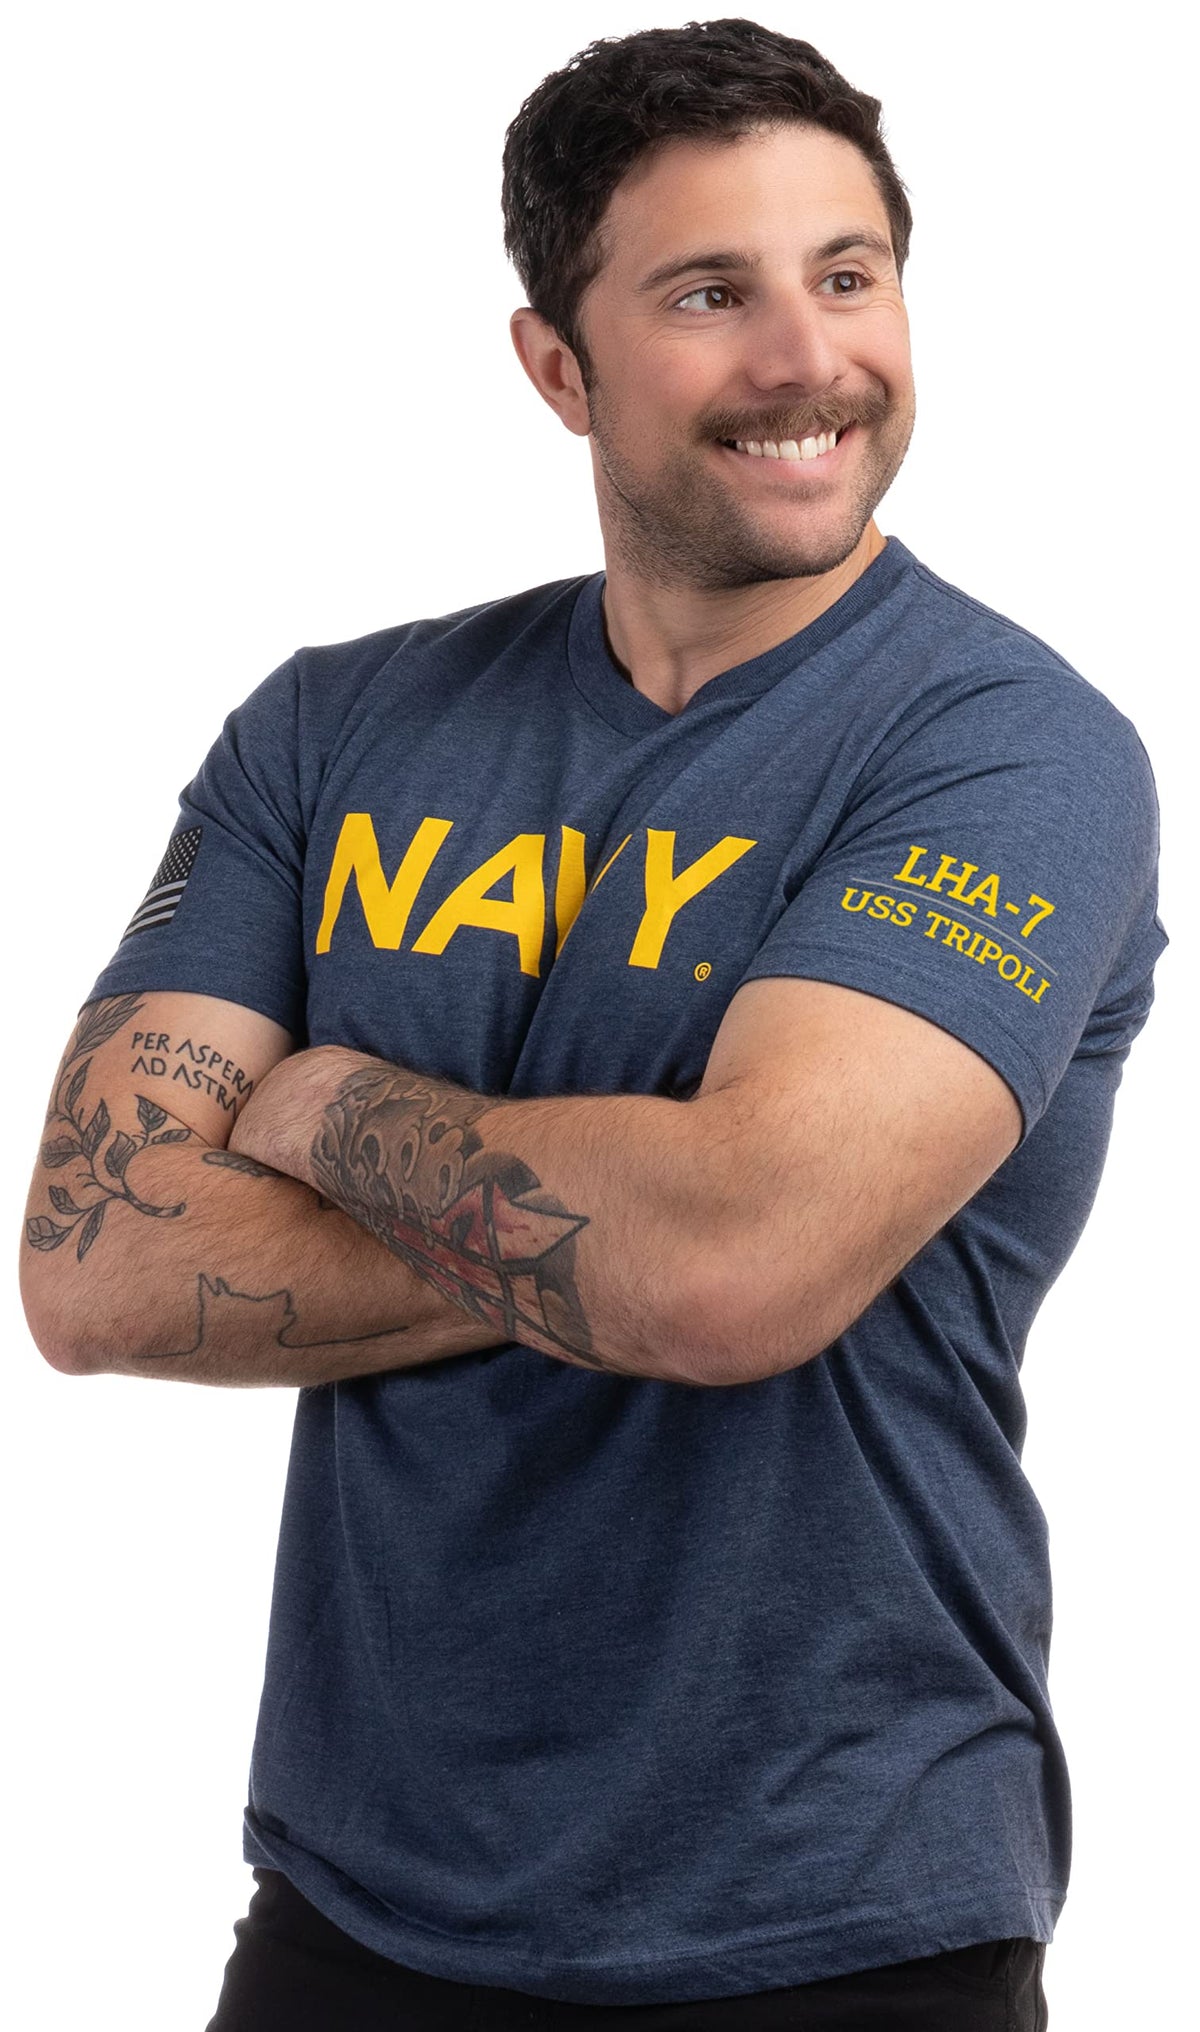 USS Tripoli, LHA-7 | U.S. Navy Sailor Veteran USN United States Naval T-shirt for Men Women